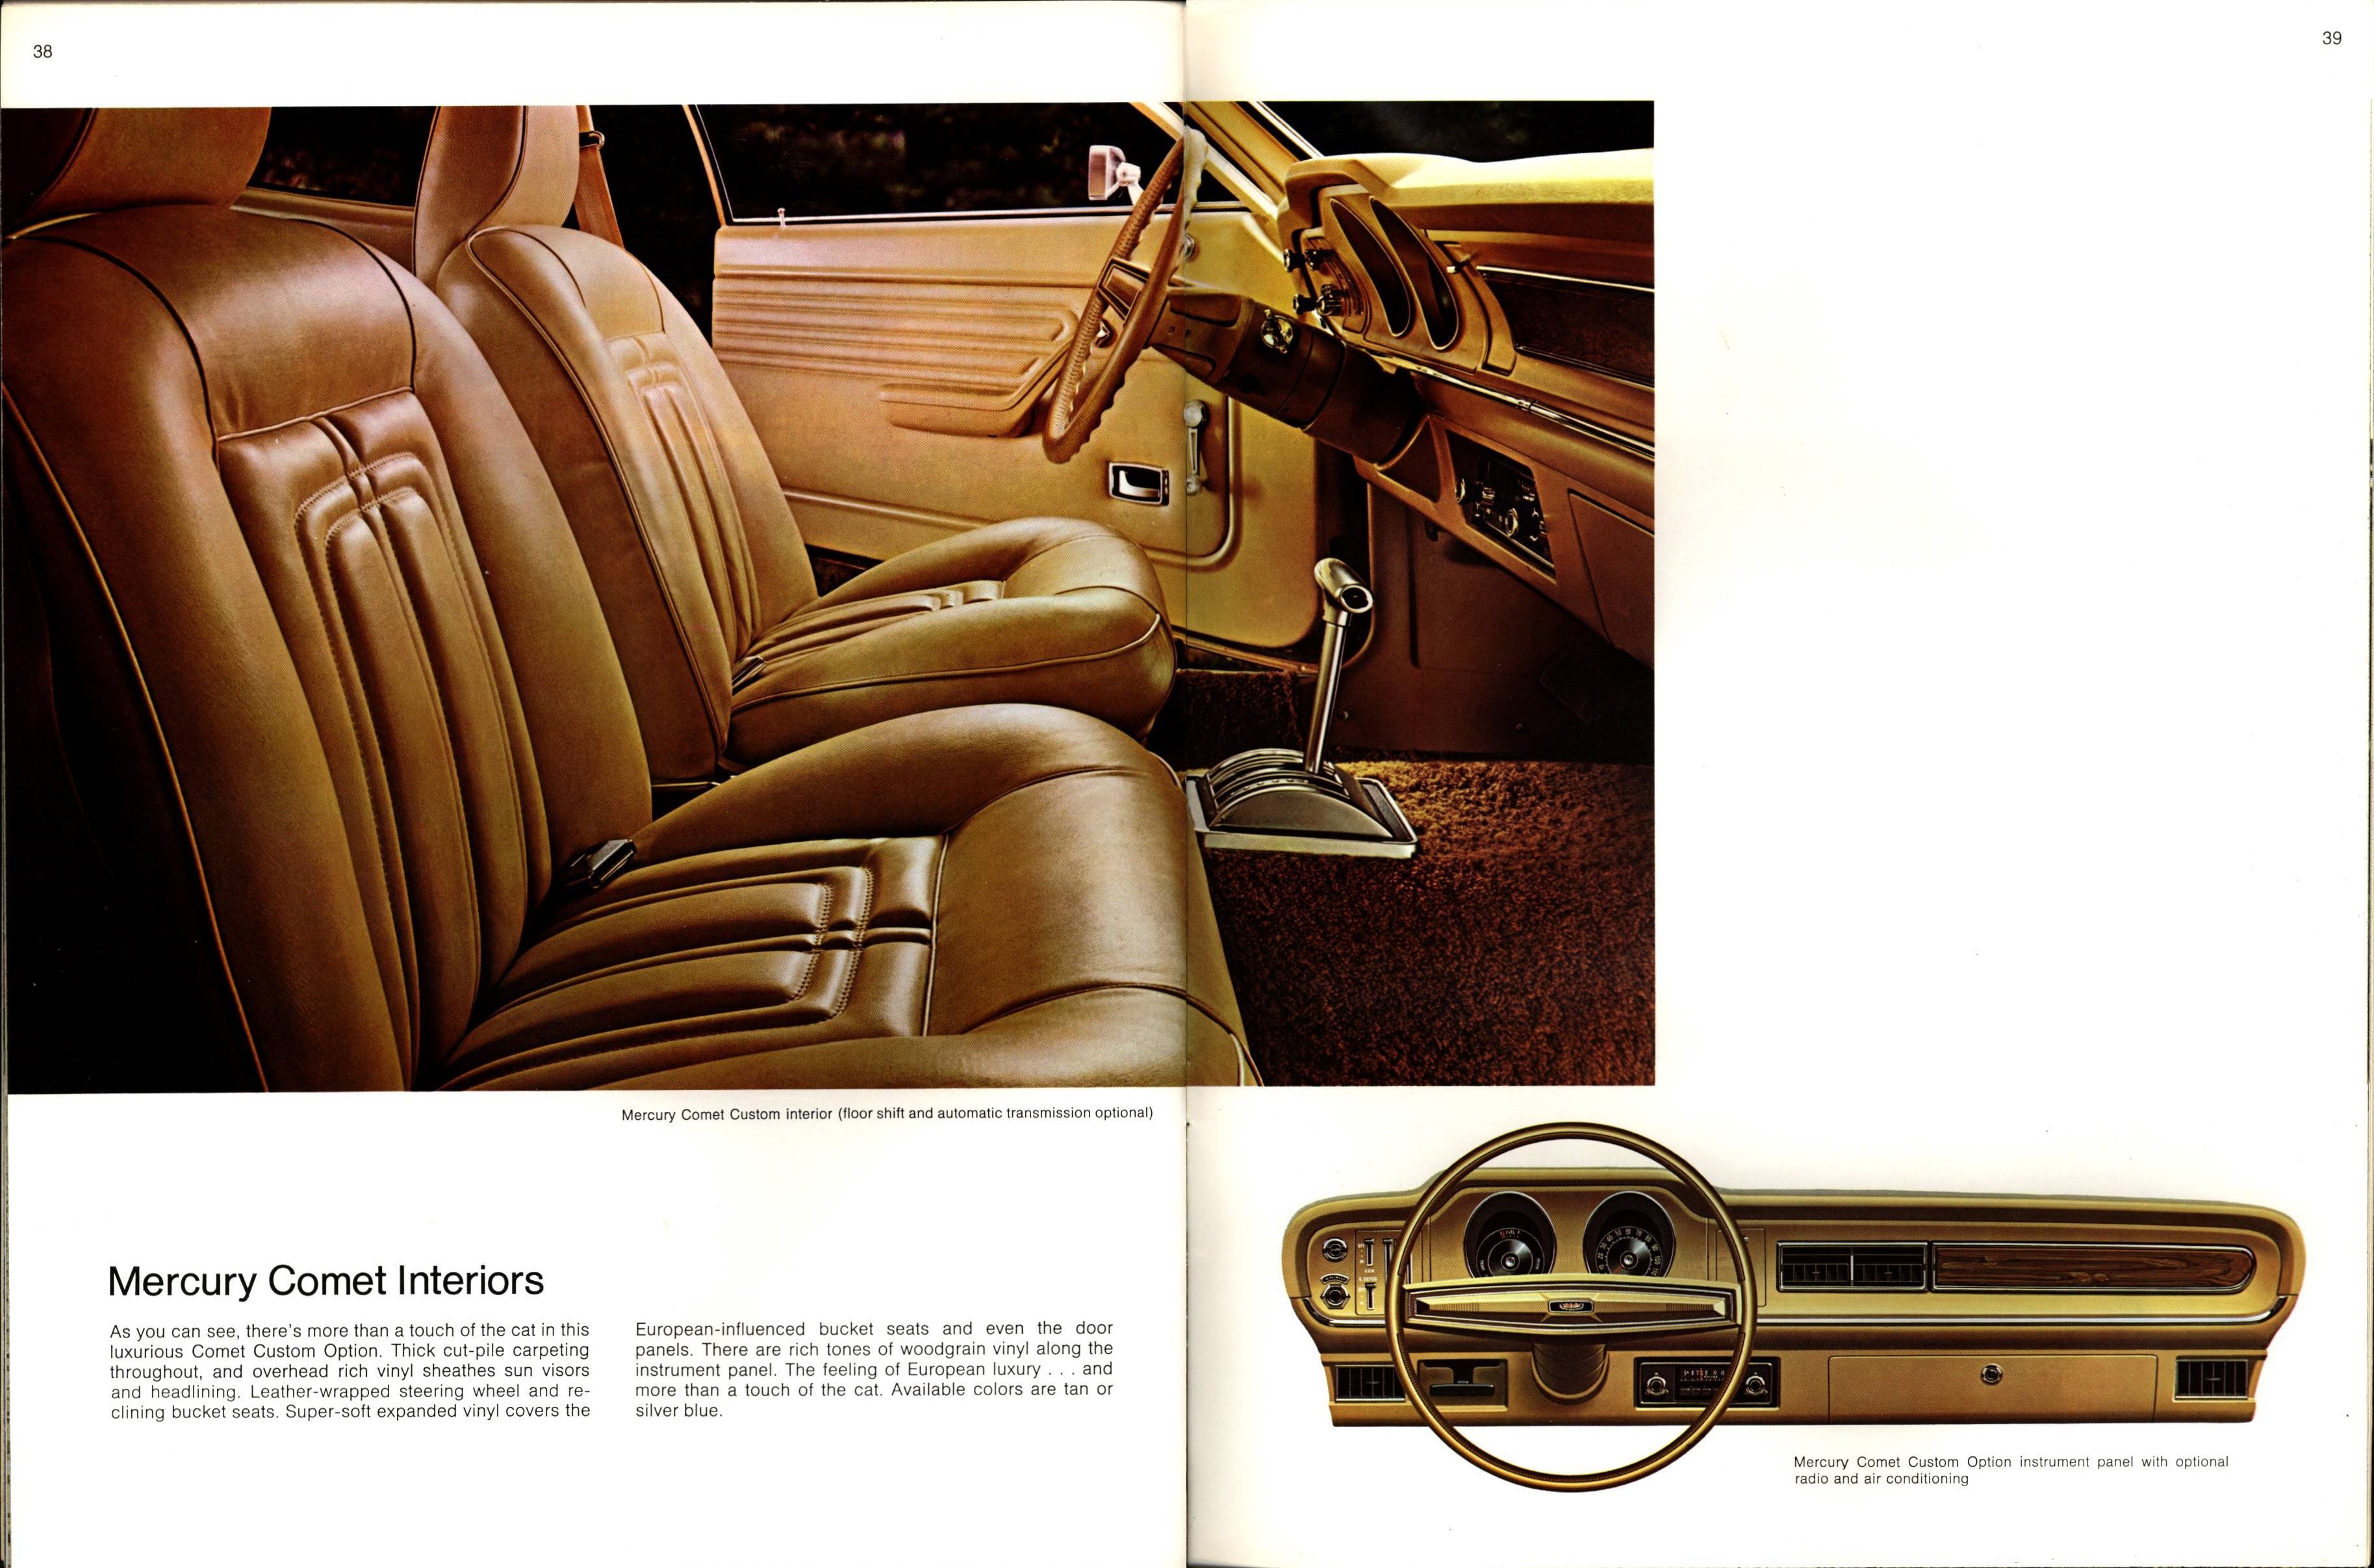 1974 Mercury Full Line Brochure 38-39